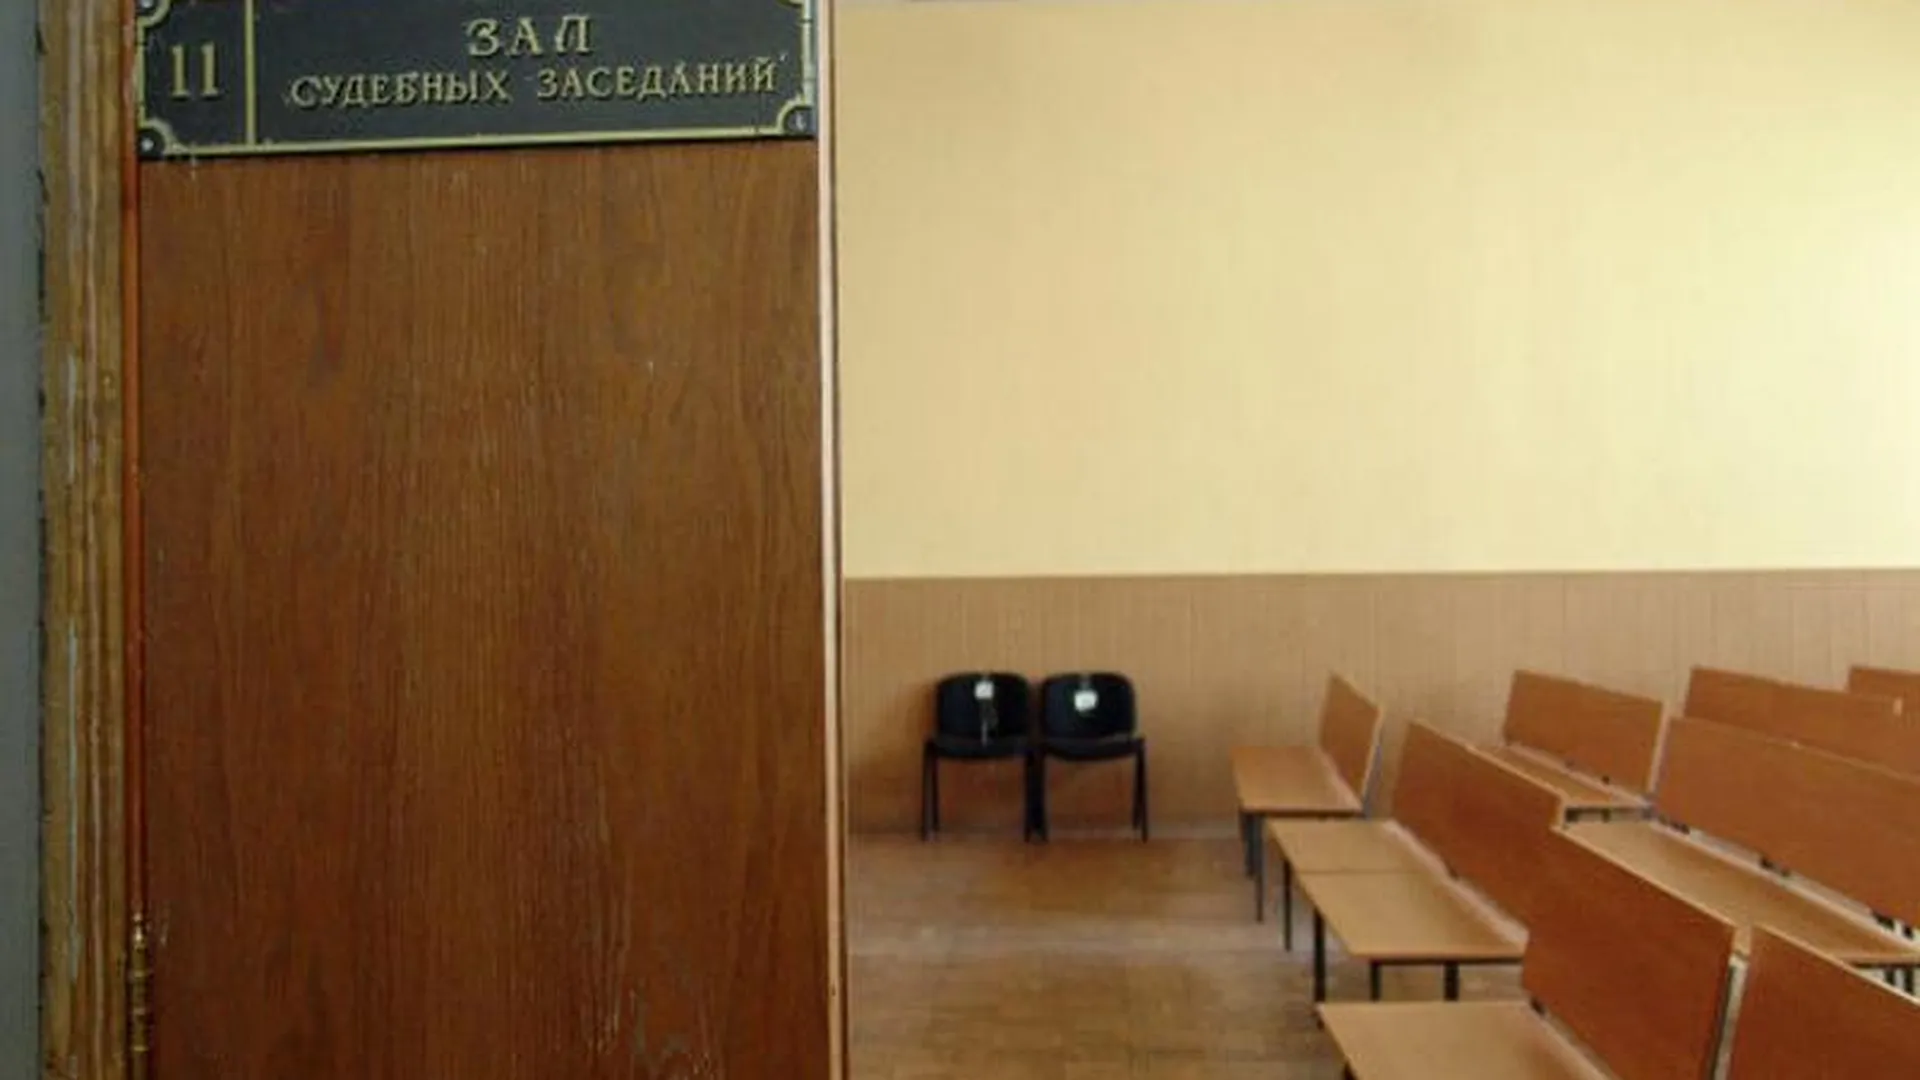 Мужчину, избившего врача в Орехово-Зуево, отправили в СИЗО